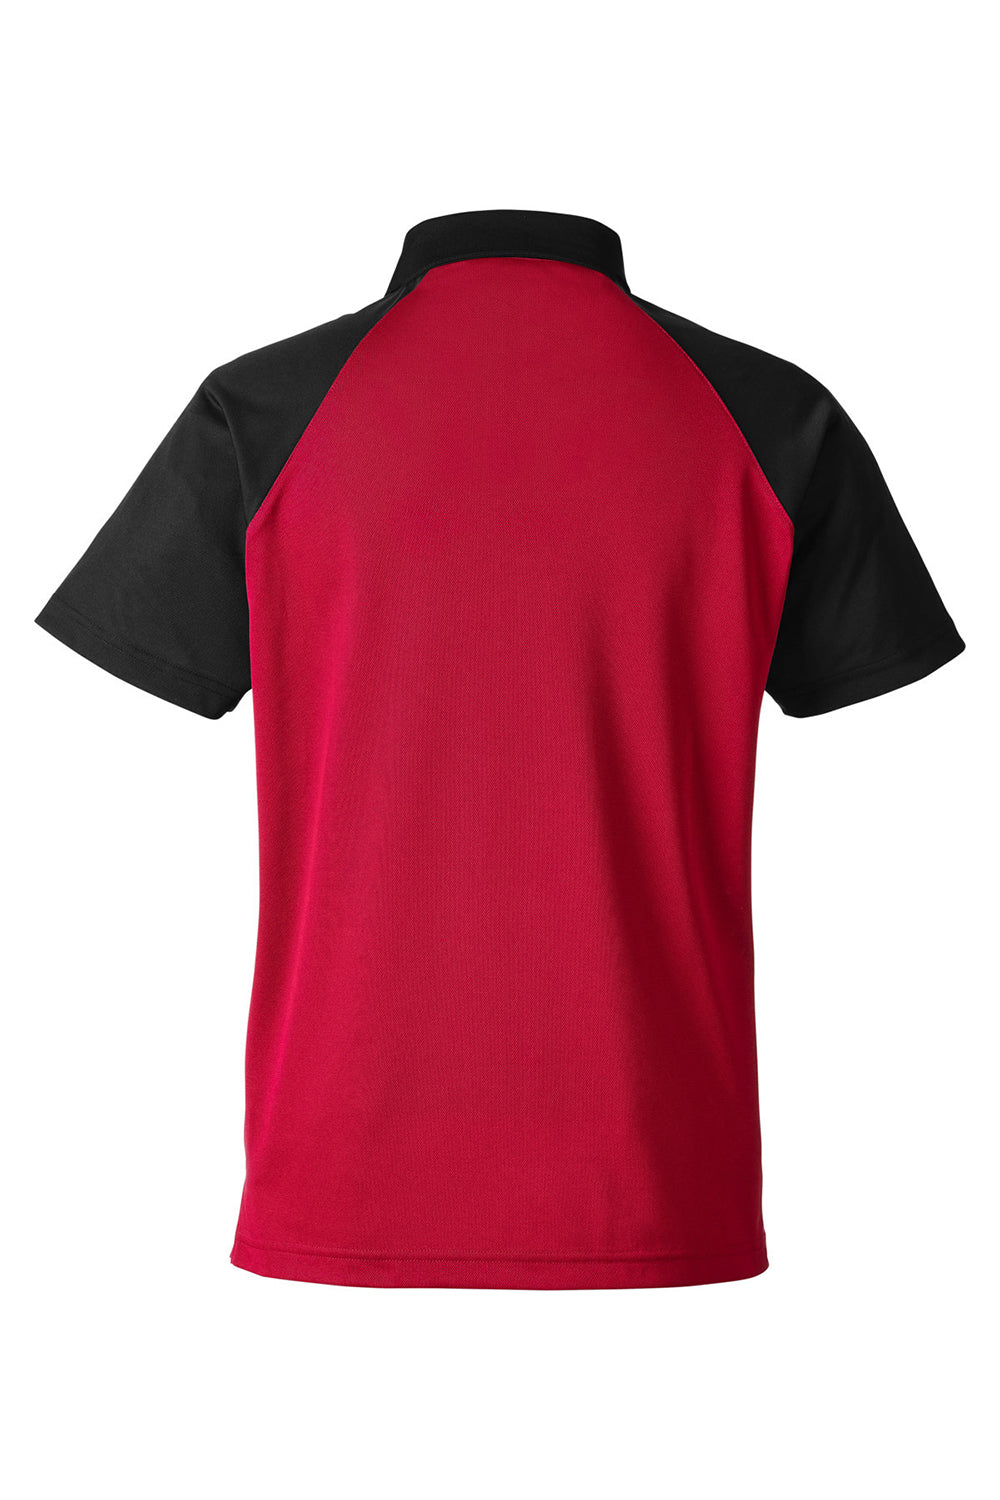 Team 365 TT21C Mens Command Colorblock Moisture Wicking Short Sleeve Polo Shirt Red/Black Flat Back